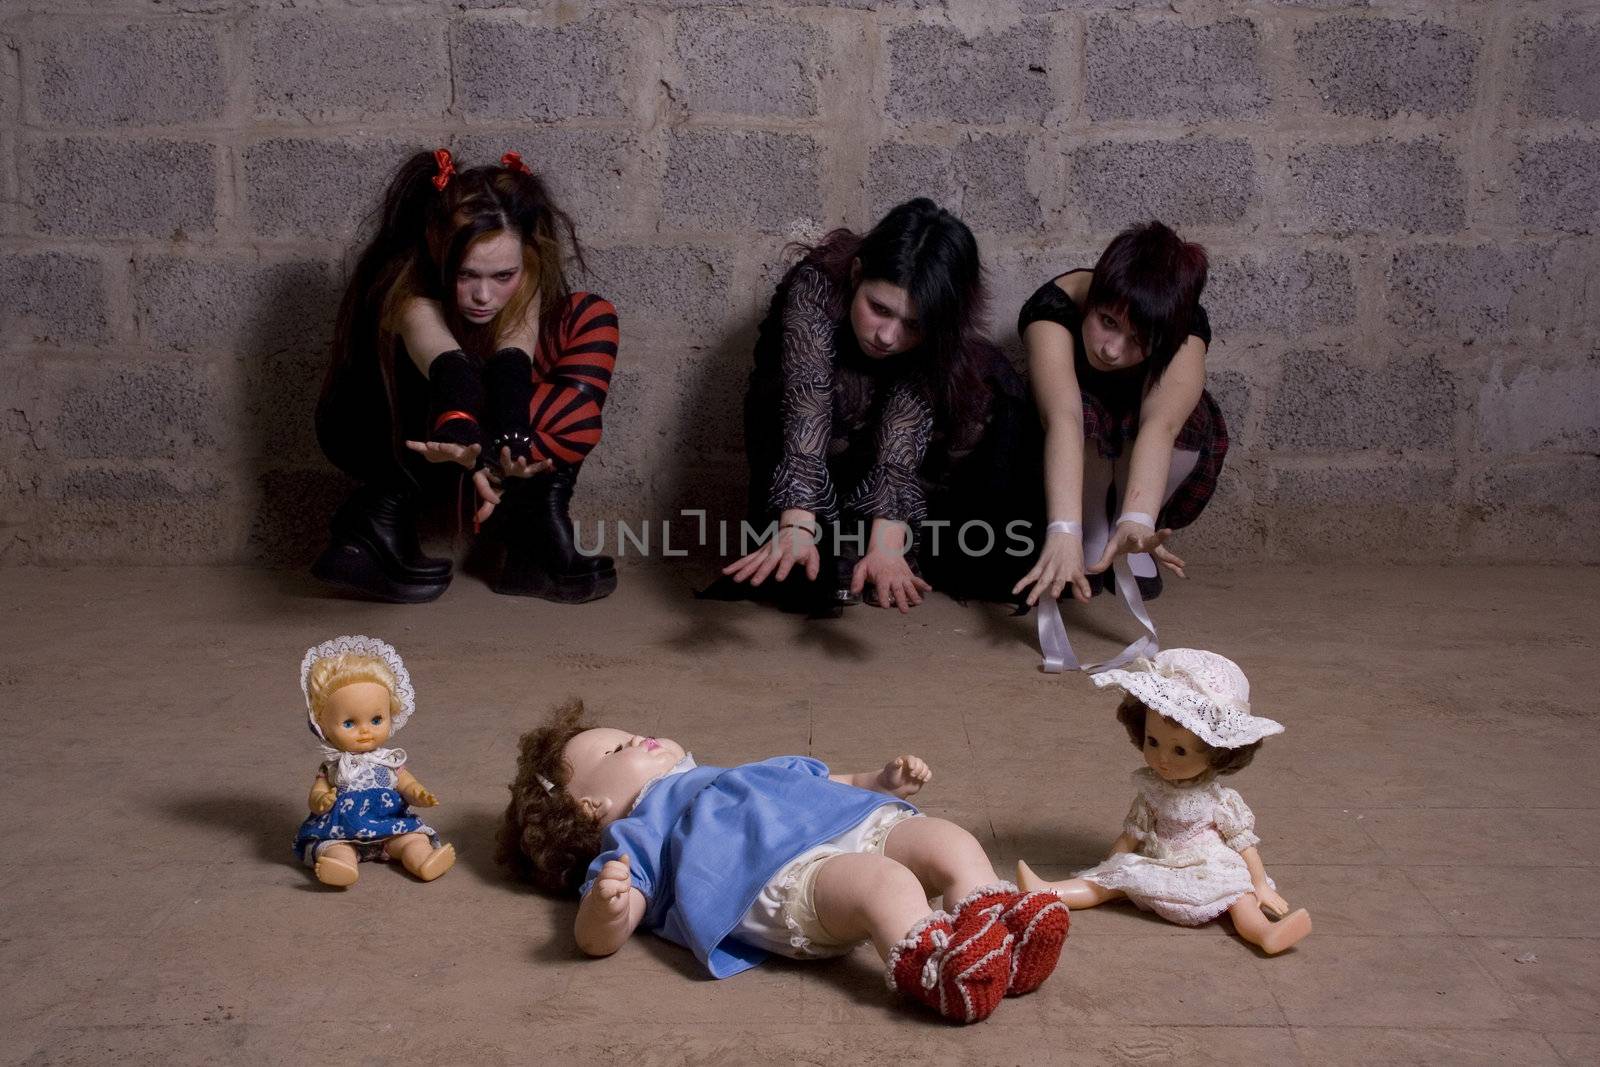 Sad, gloomy girls pull hands to dolls